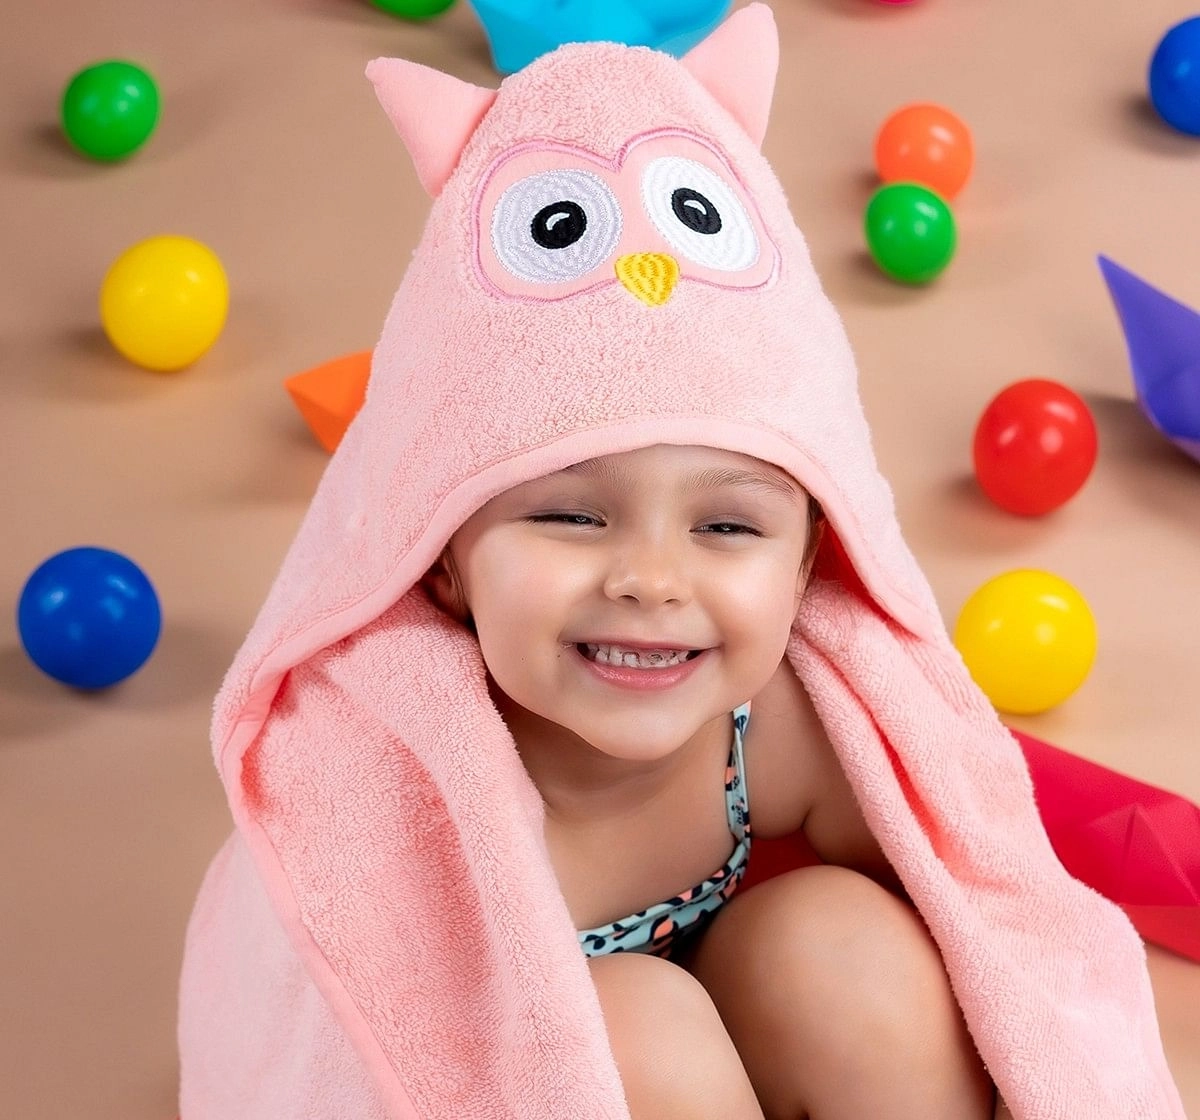 Rabitat Kids Hooded Bath Towel Super Soft Made with Zero Twist Cotton, Pink, Pink Owl, 5Y+